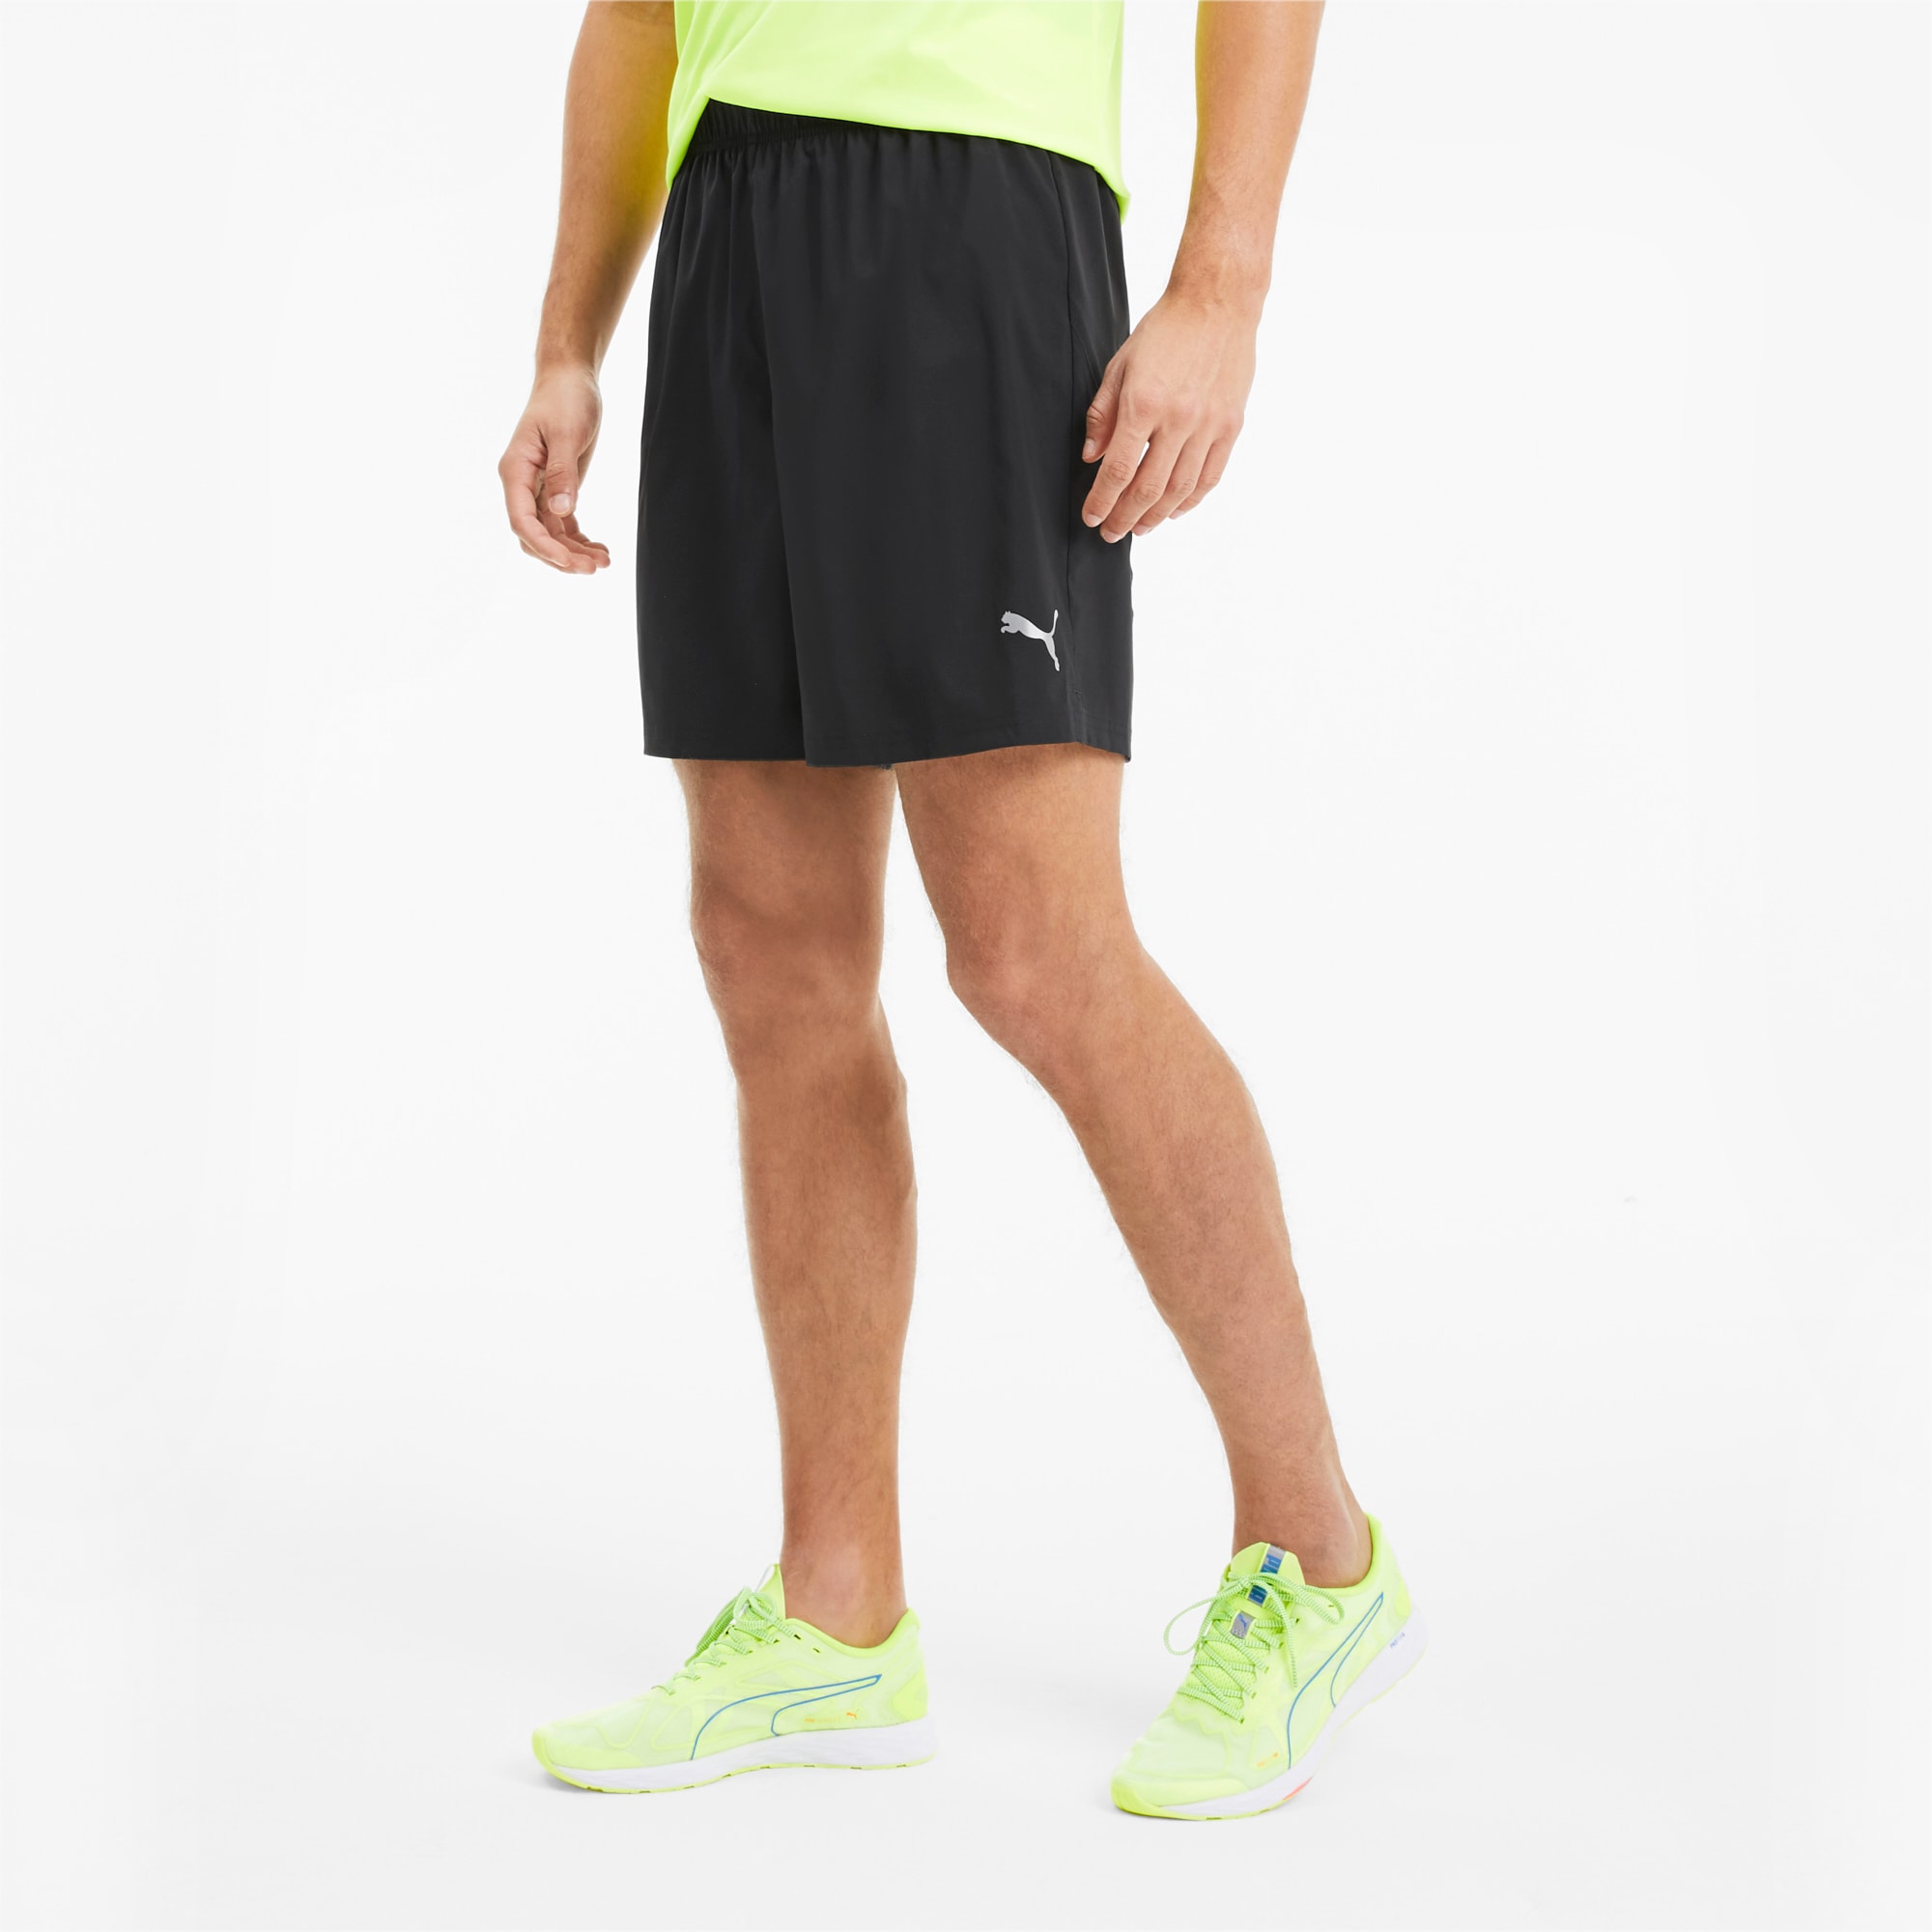 puma 2 in 1 running shorts